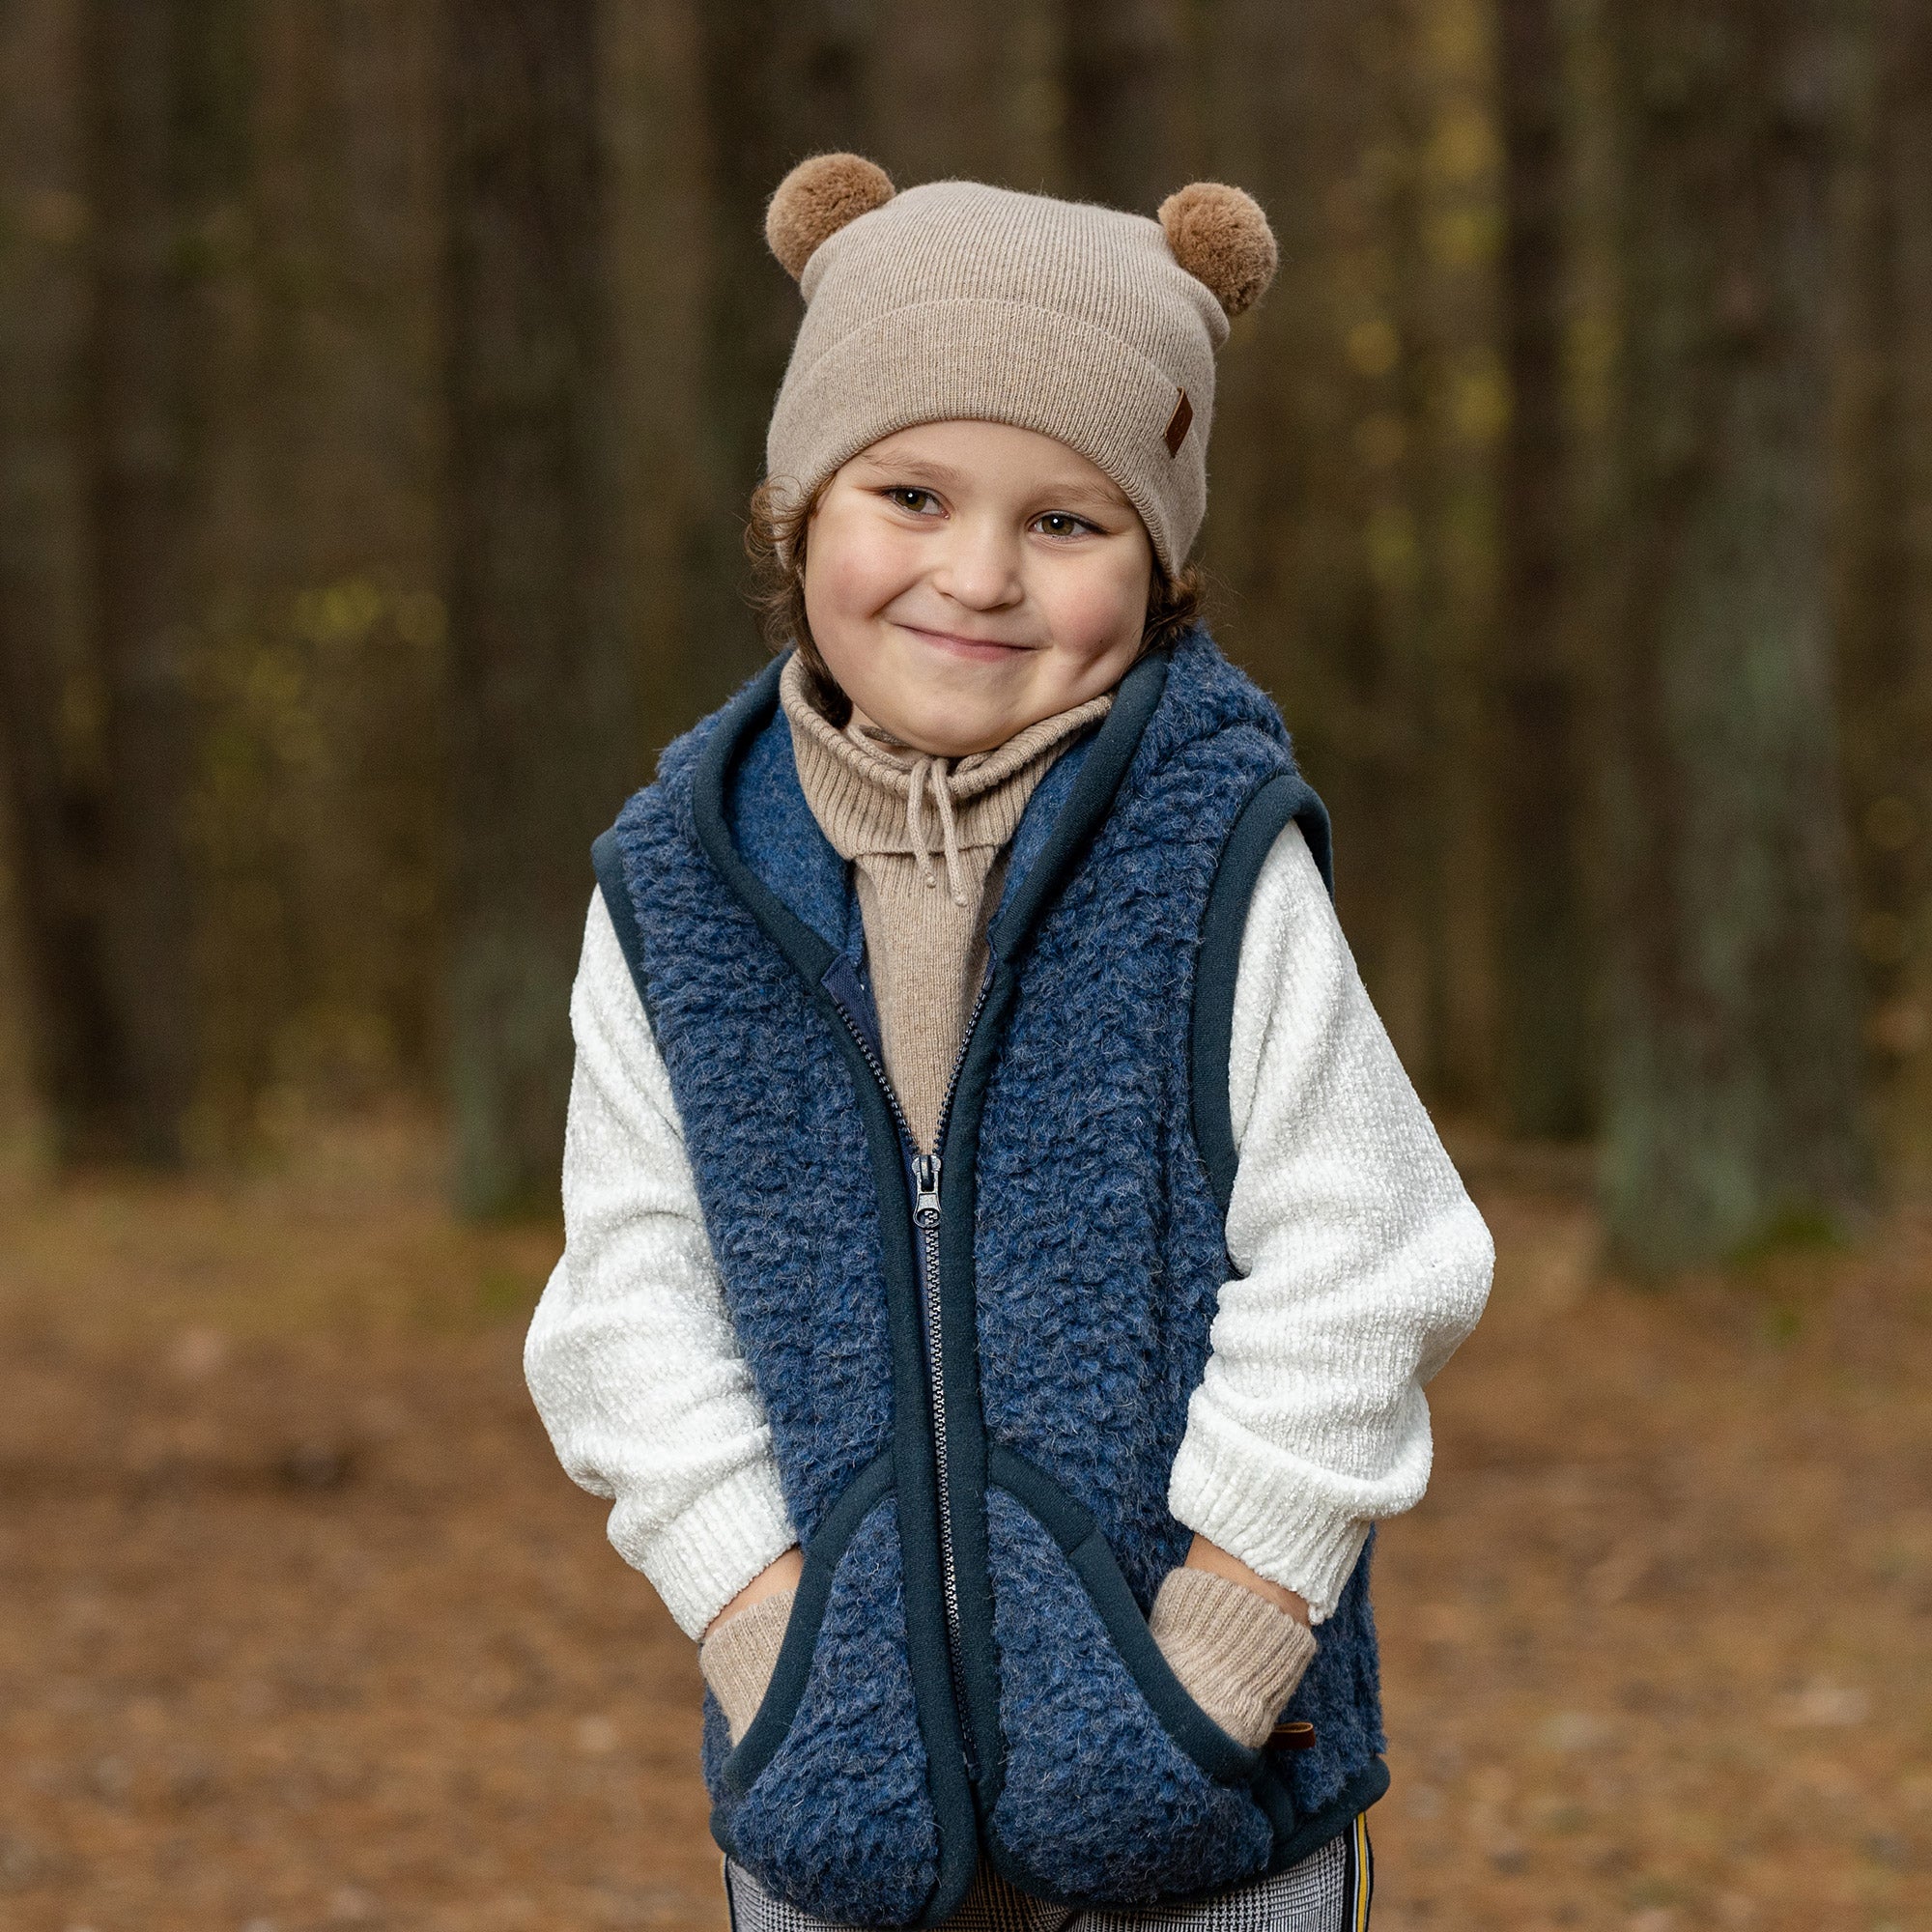  Fleece vest for kids by menique unisex toddler vest with a zipper in denim color